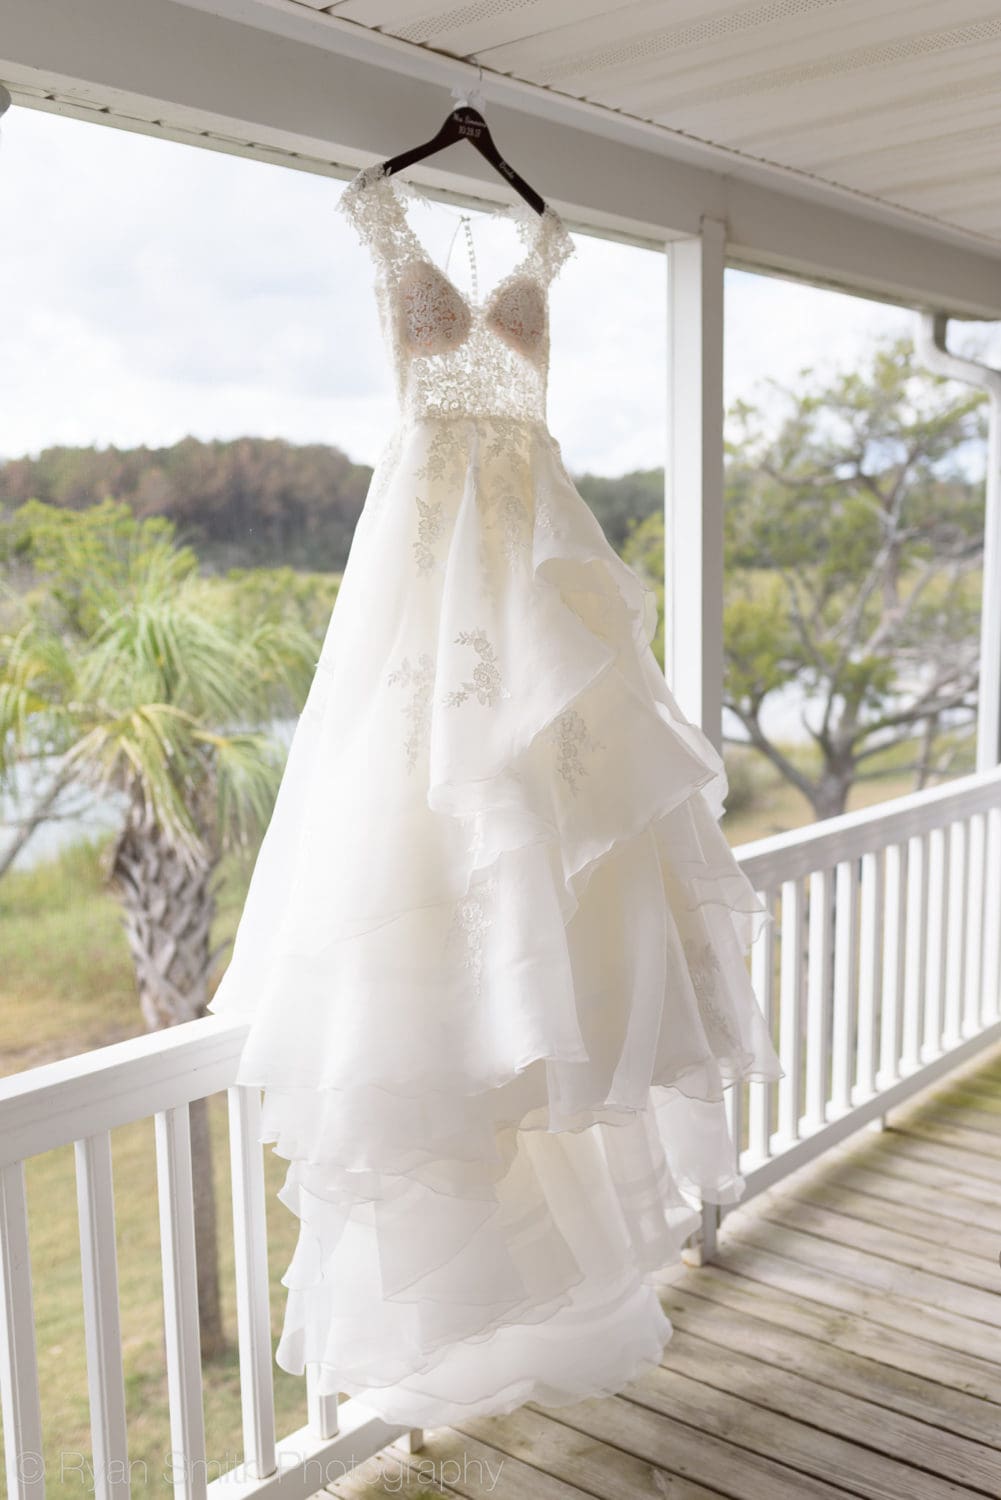 Brides dress hanging on the porch - Pawleys Island